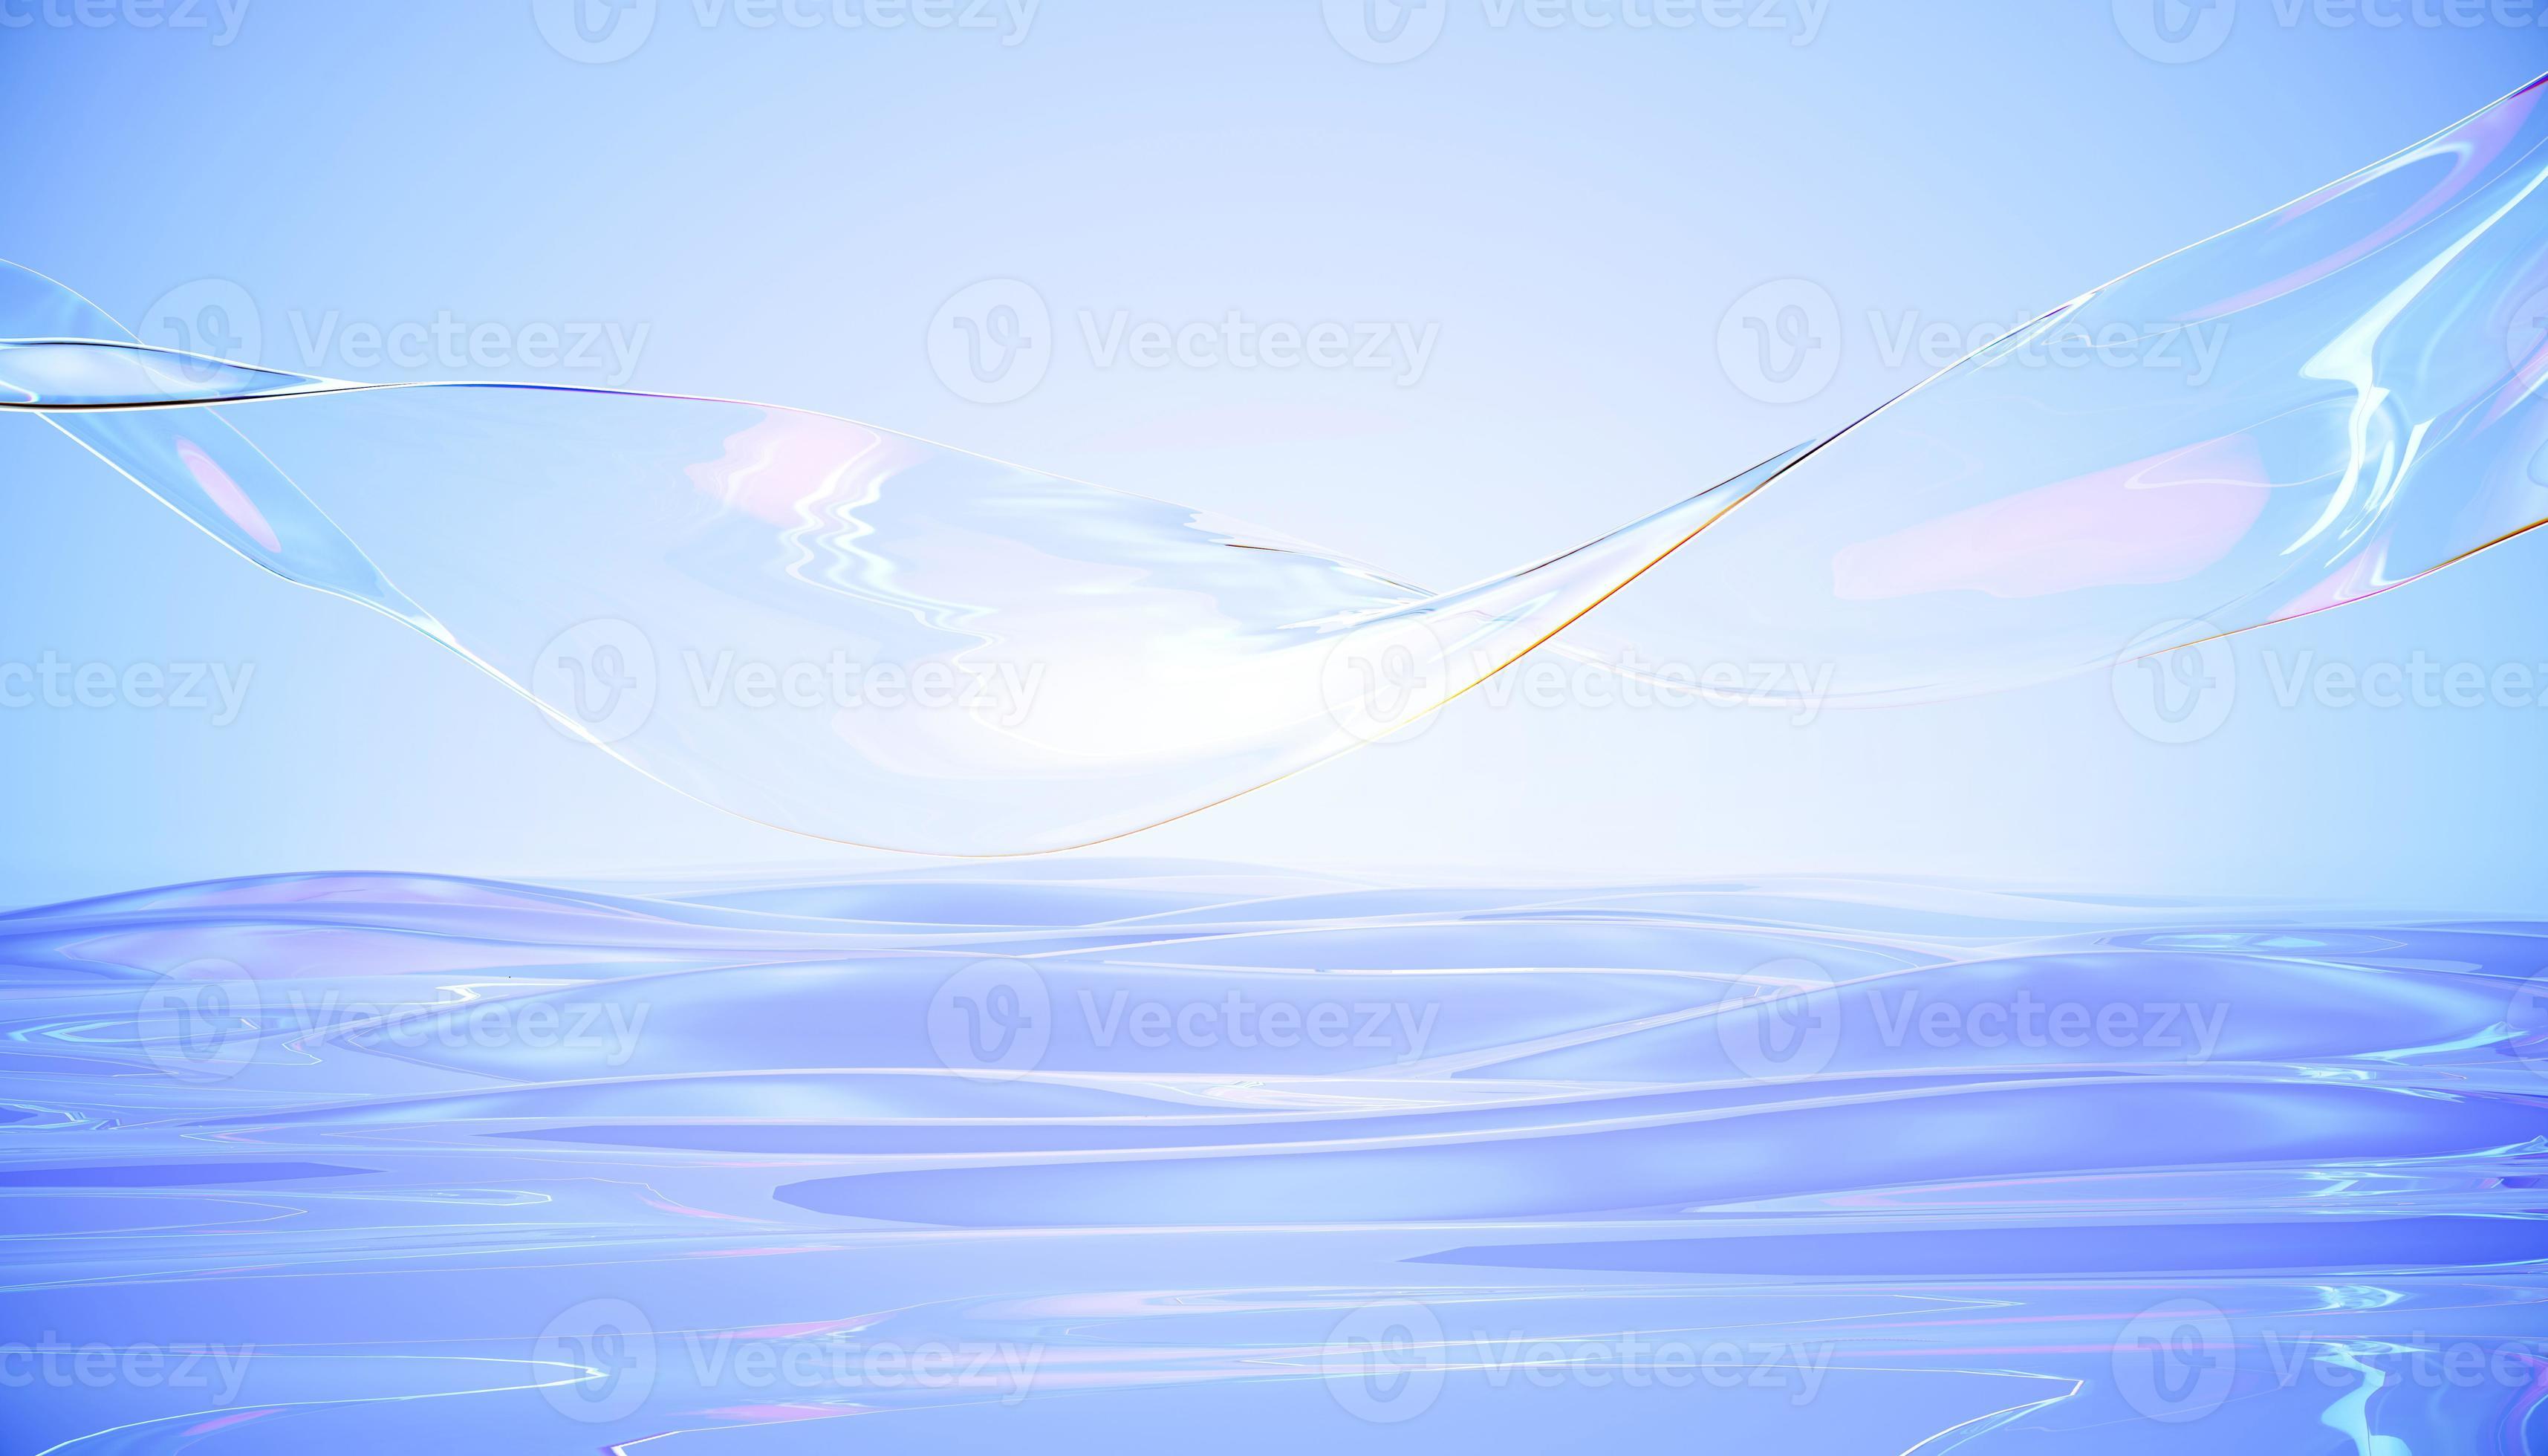 1505076 Light Blue Ocean Images Stock Photos  Vectors  Shutterstock